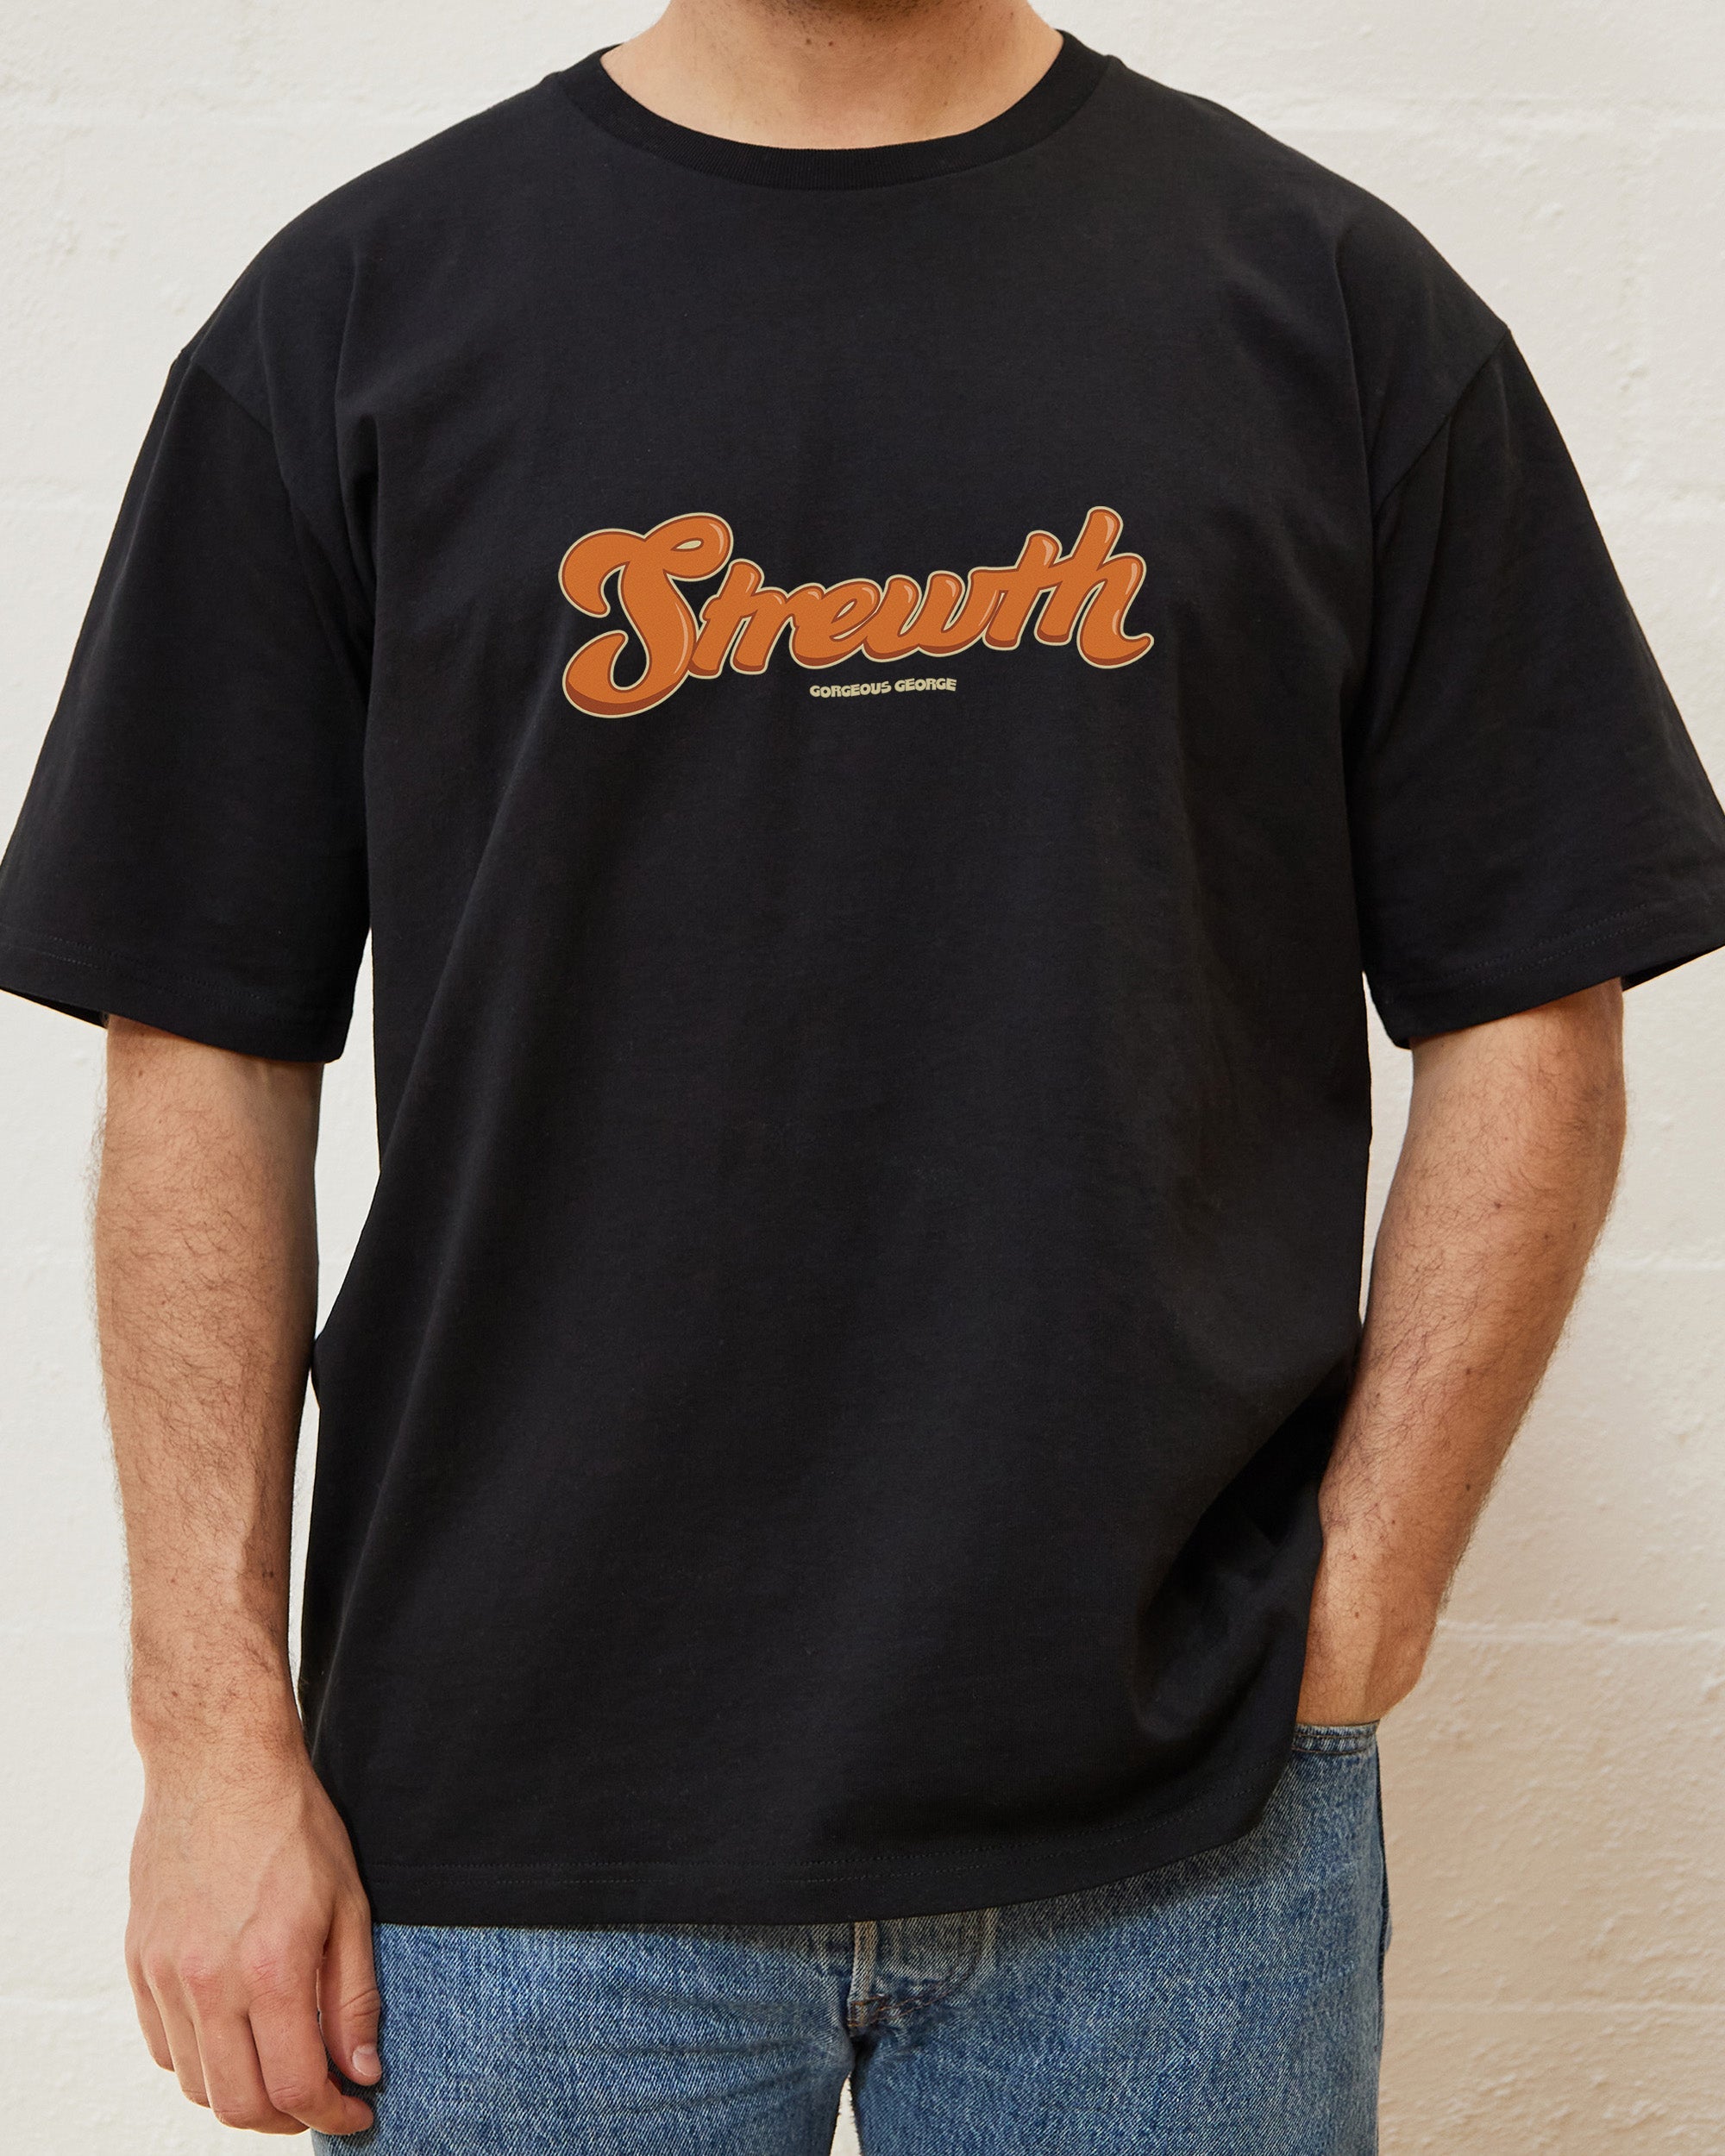 Strewth T-Shirt Australia Online Black